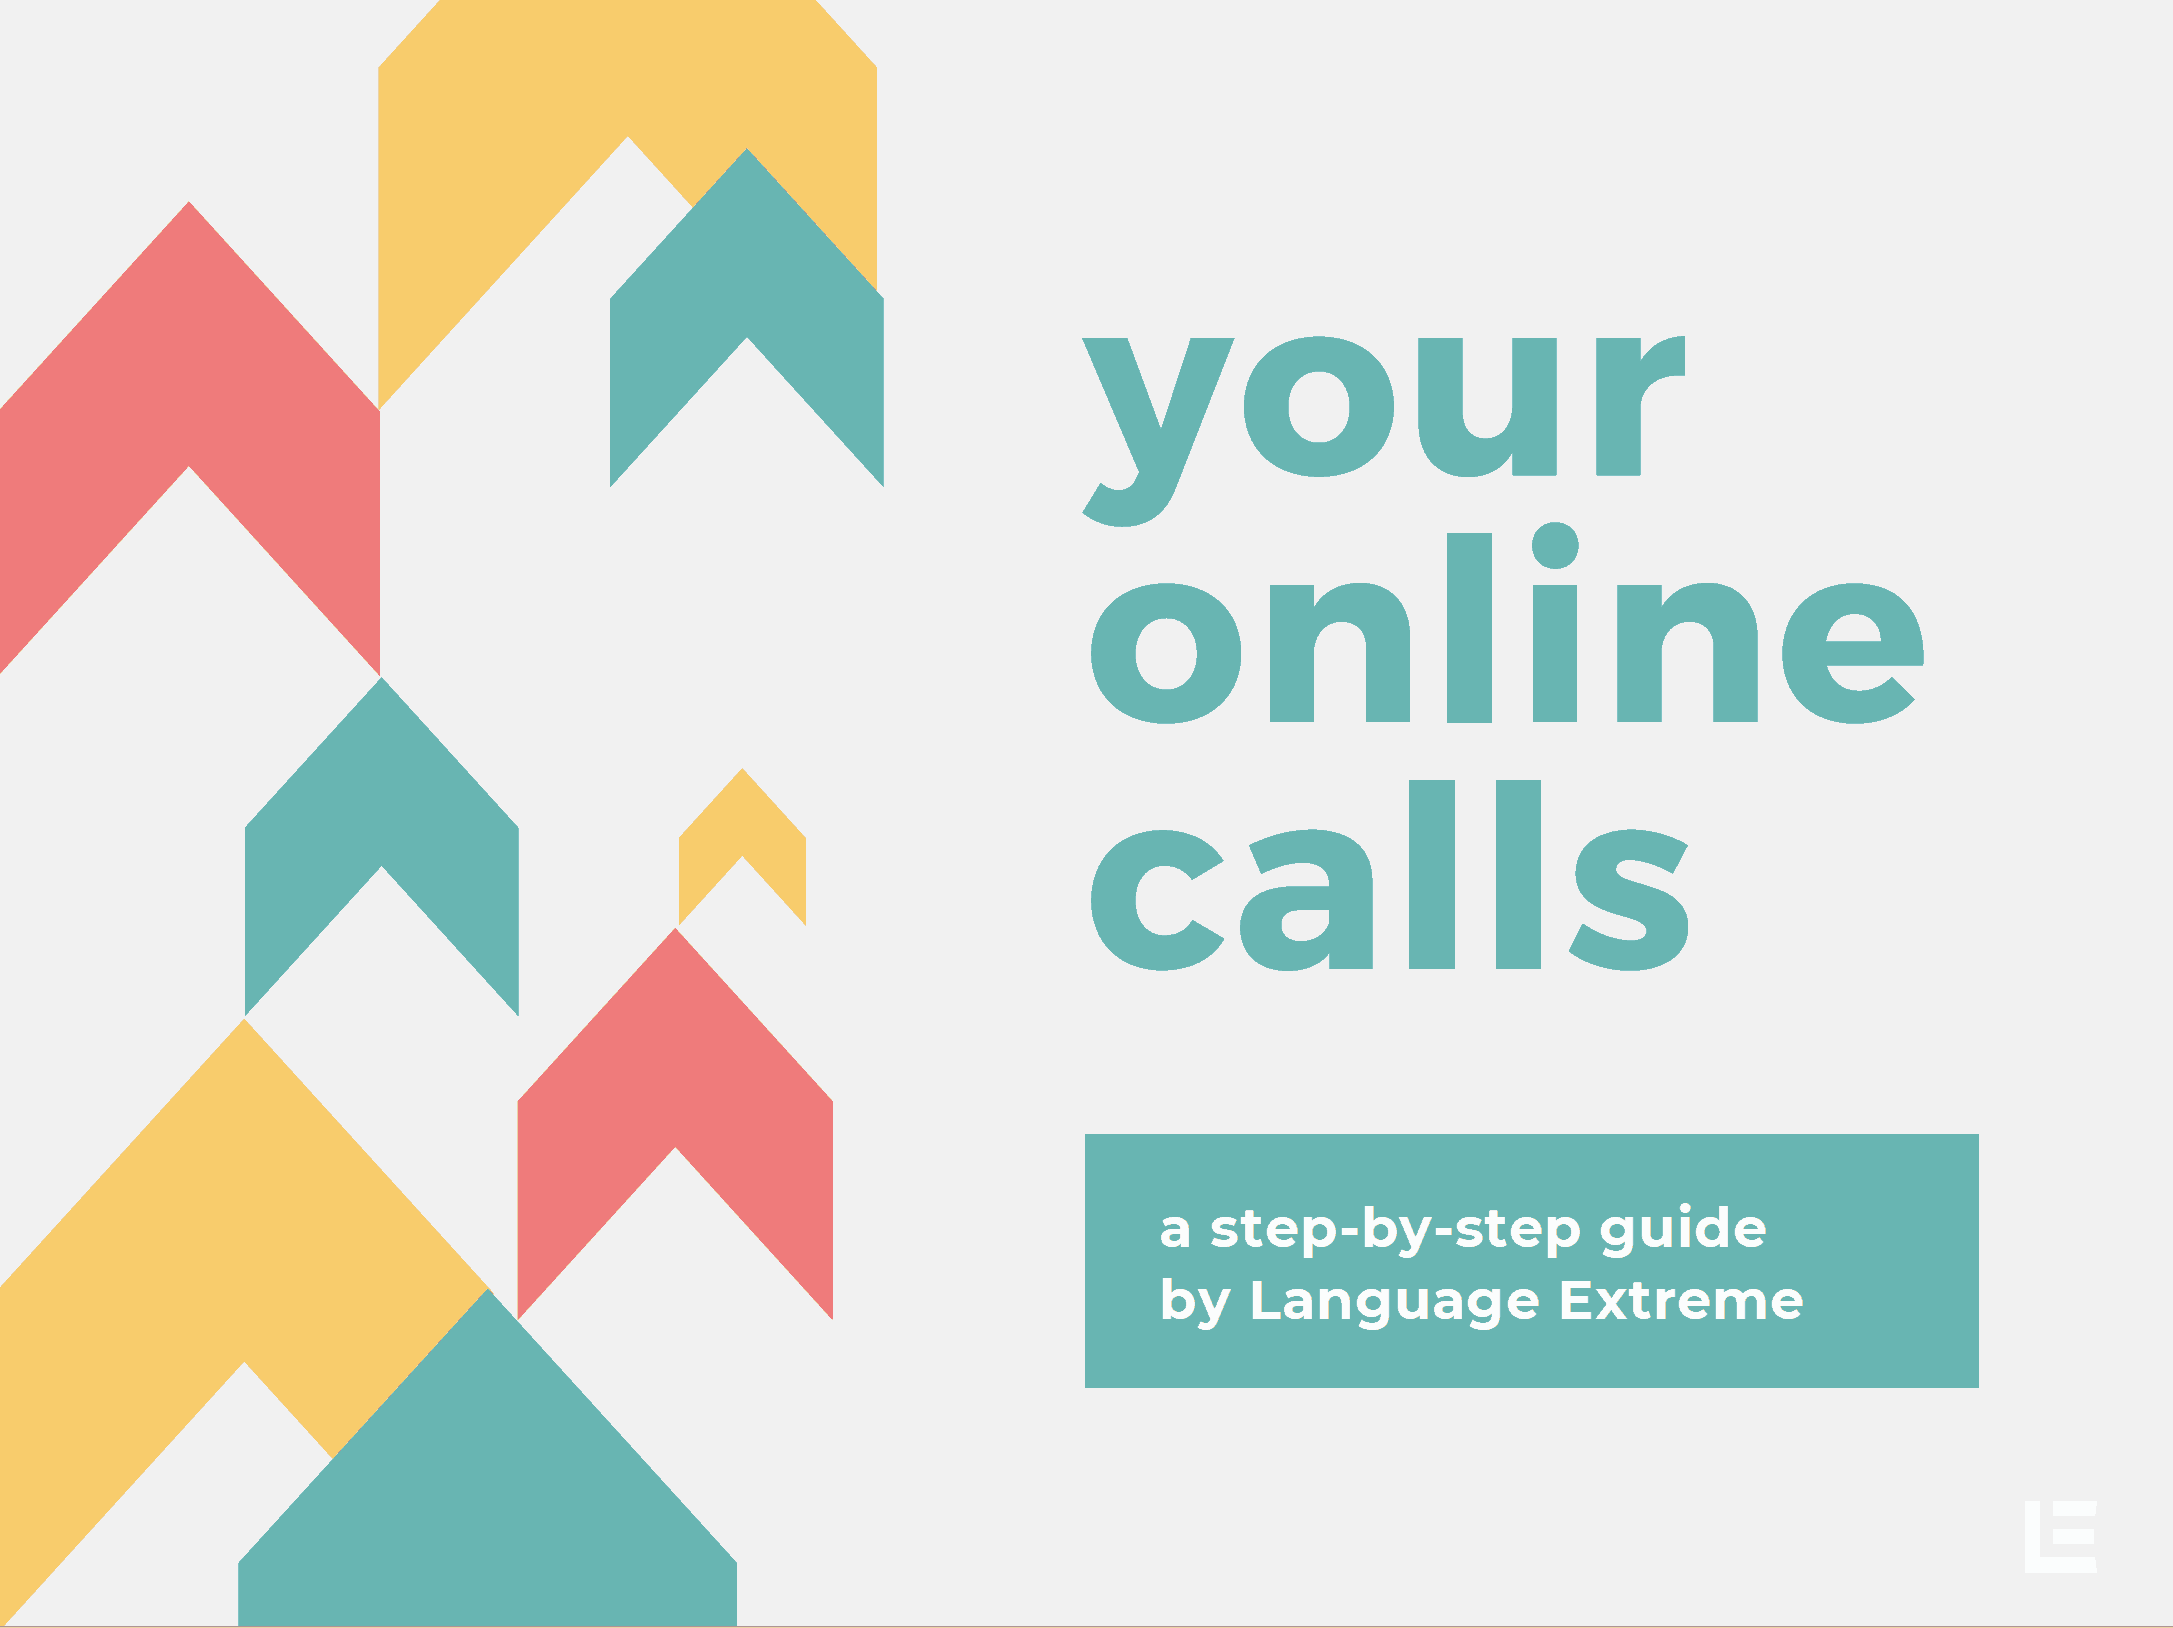 How to Run Online Calls?